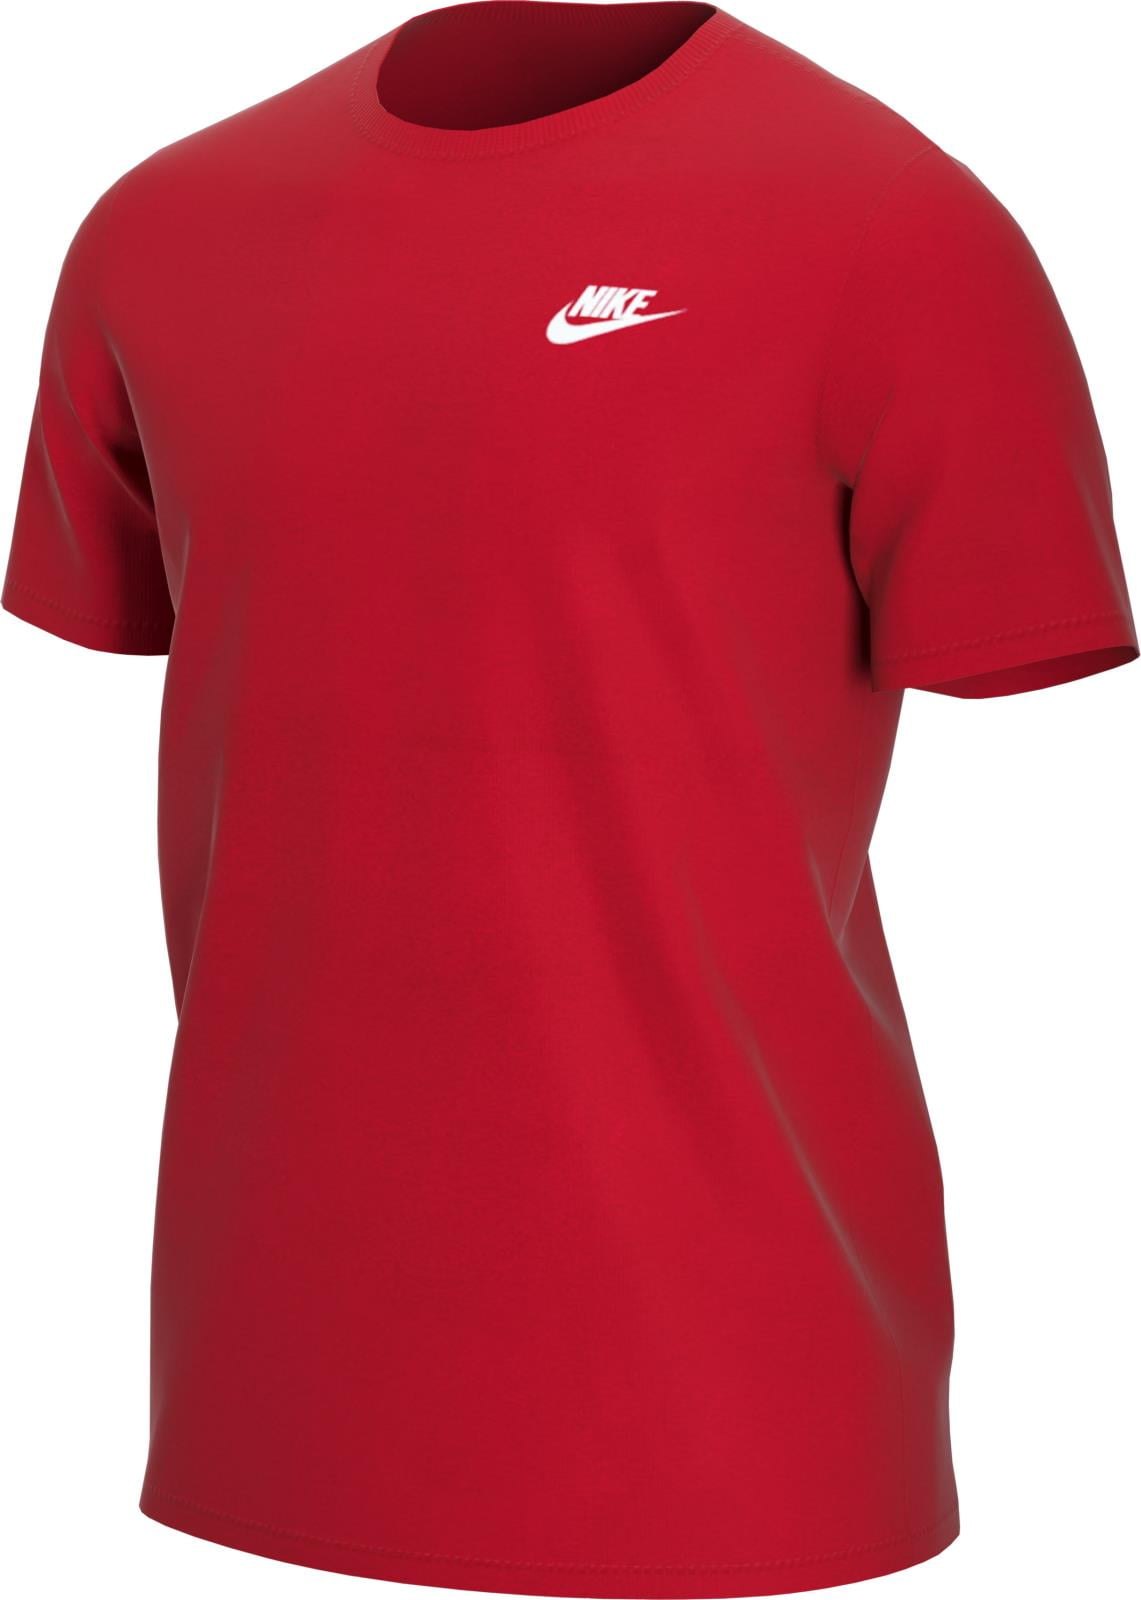 Nike AR4997-657: Men's NSW University Red/White Club Tee - Walmart.com